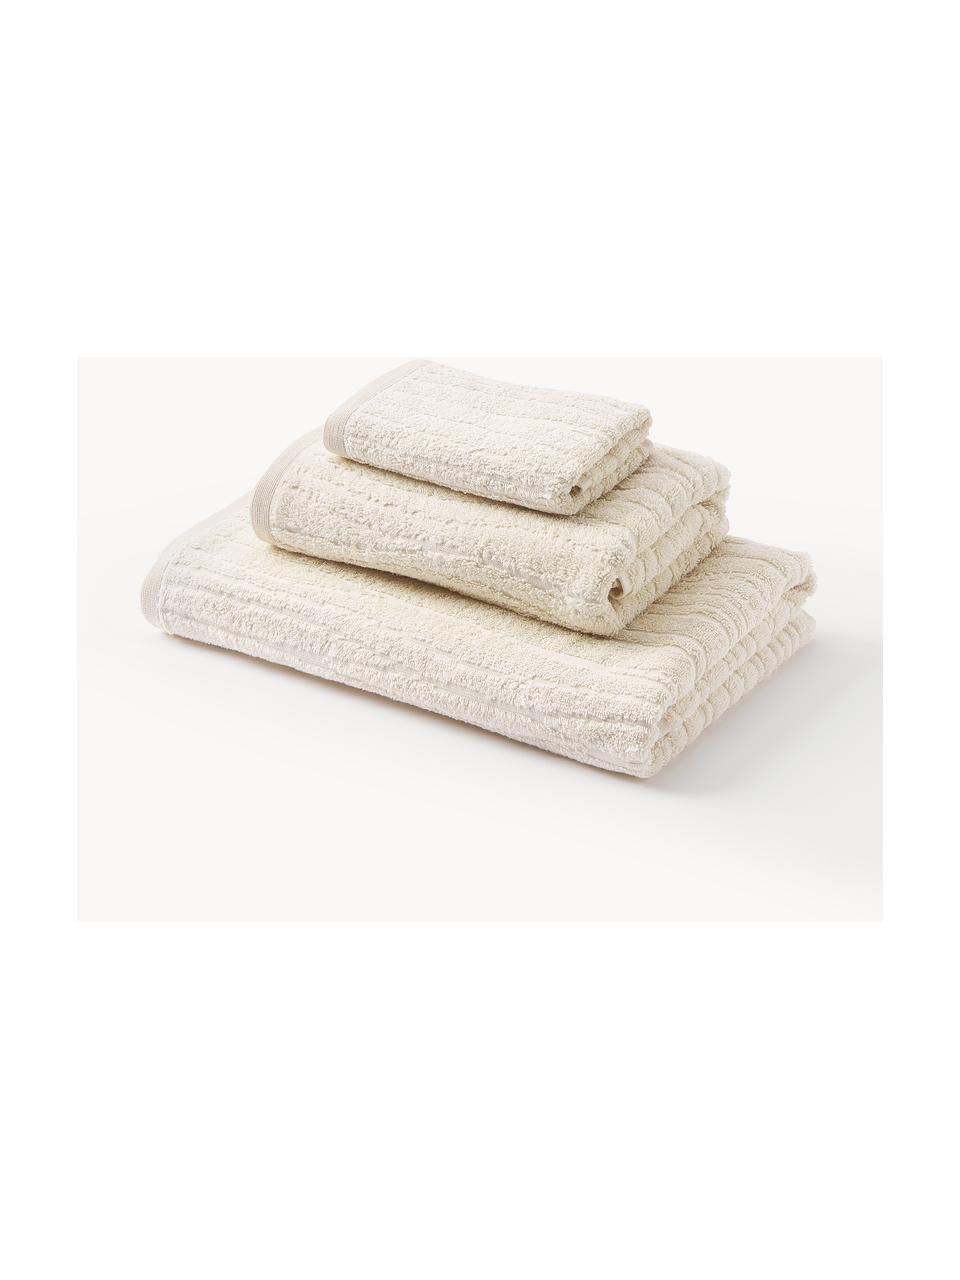 Set de toallas de algodón Audrina, tamaños diferentes, Beige claro, Set de 3 (toalla tocador, toalla lavabo y toalla ducha)